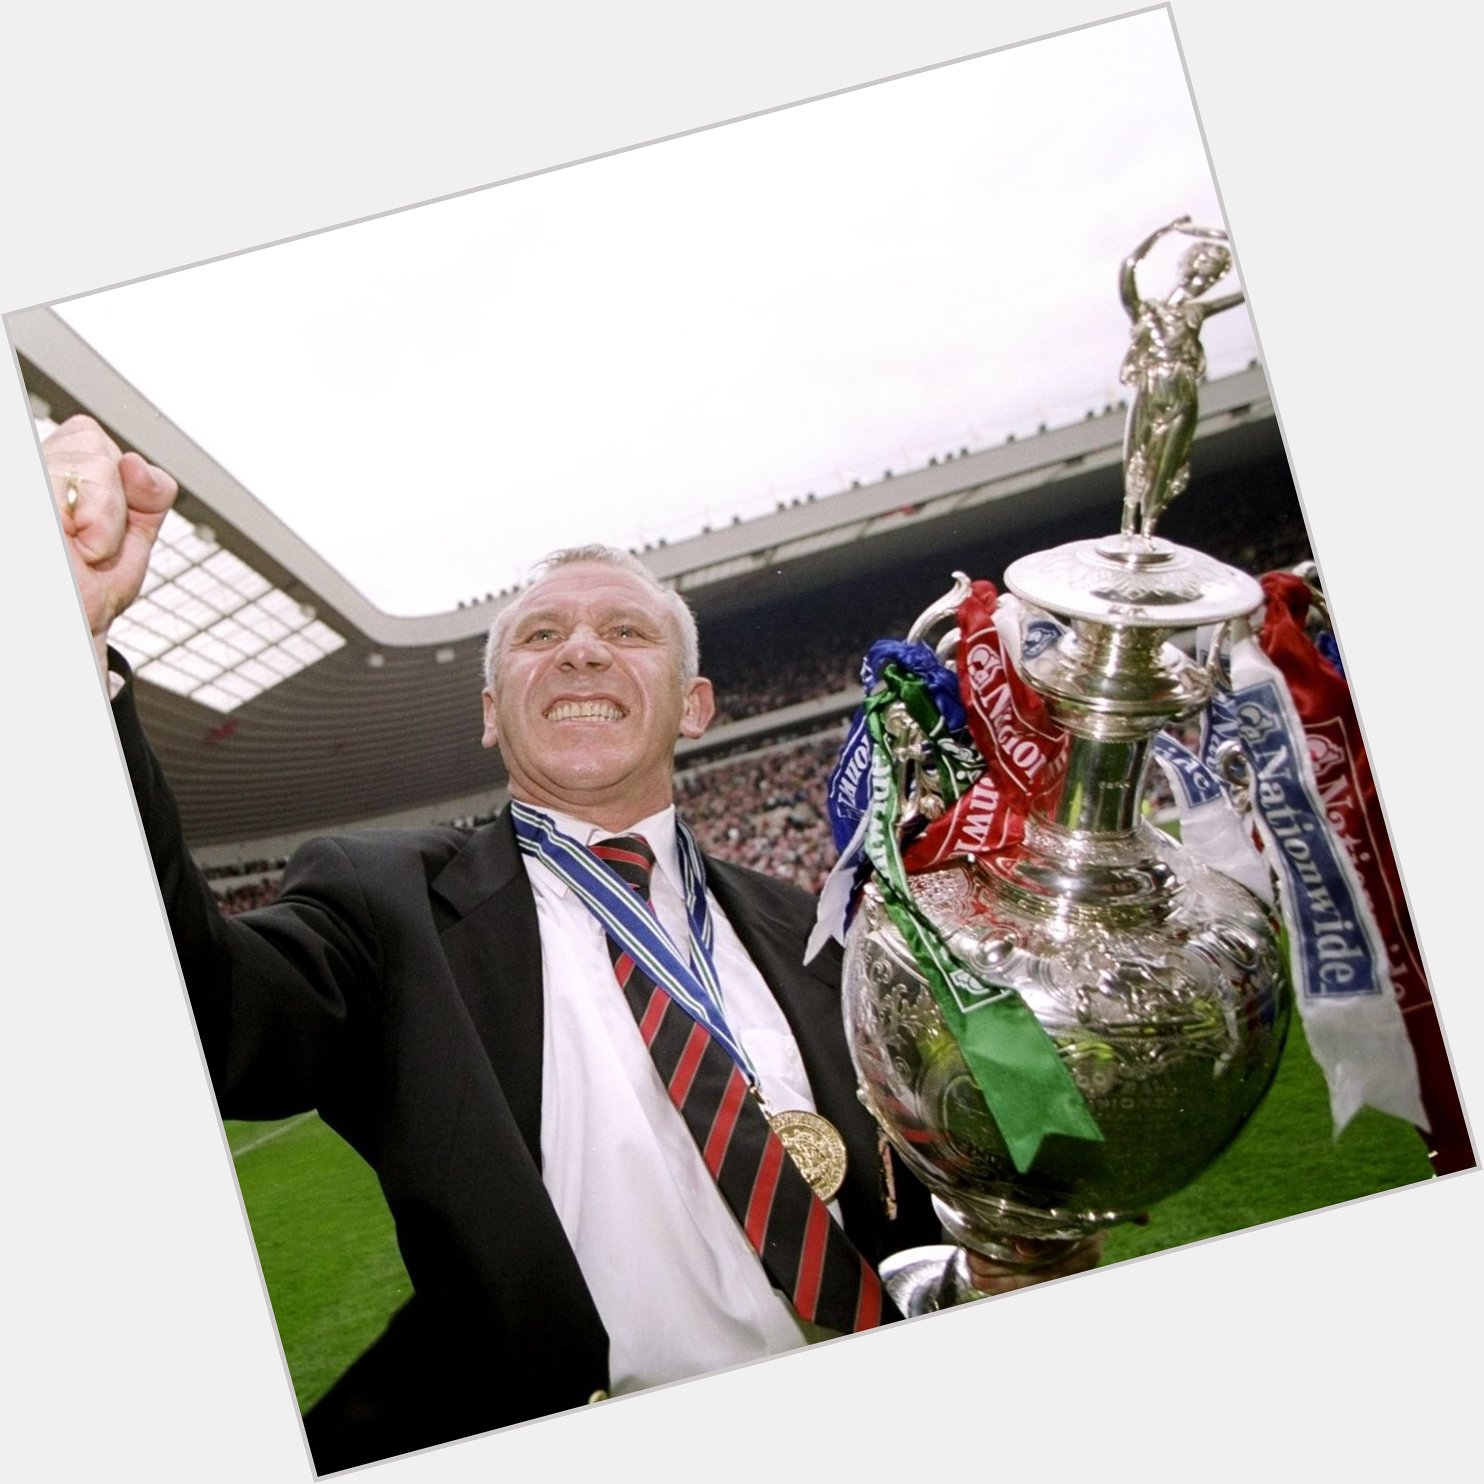 Hoje a lenda do Sunderland, Peter Reid completa 66 anos !!!
Happy birthday     